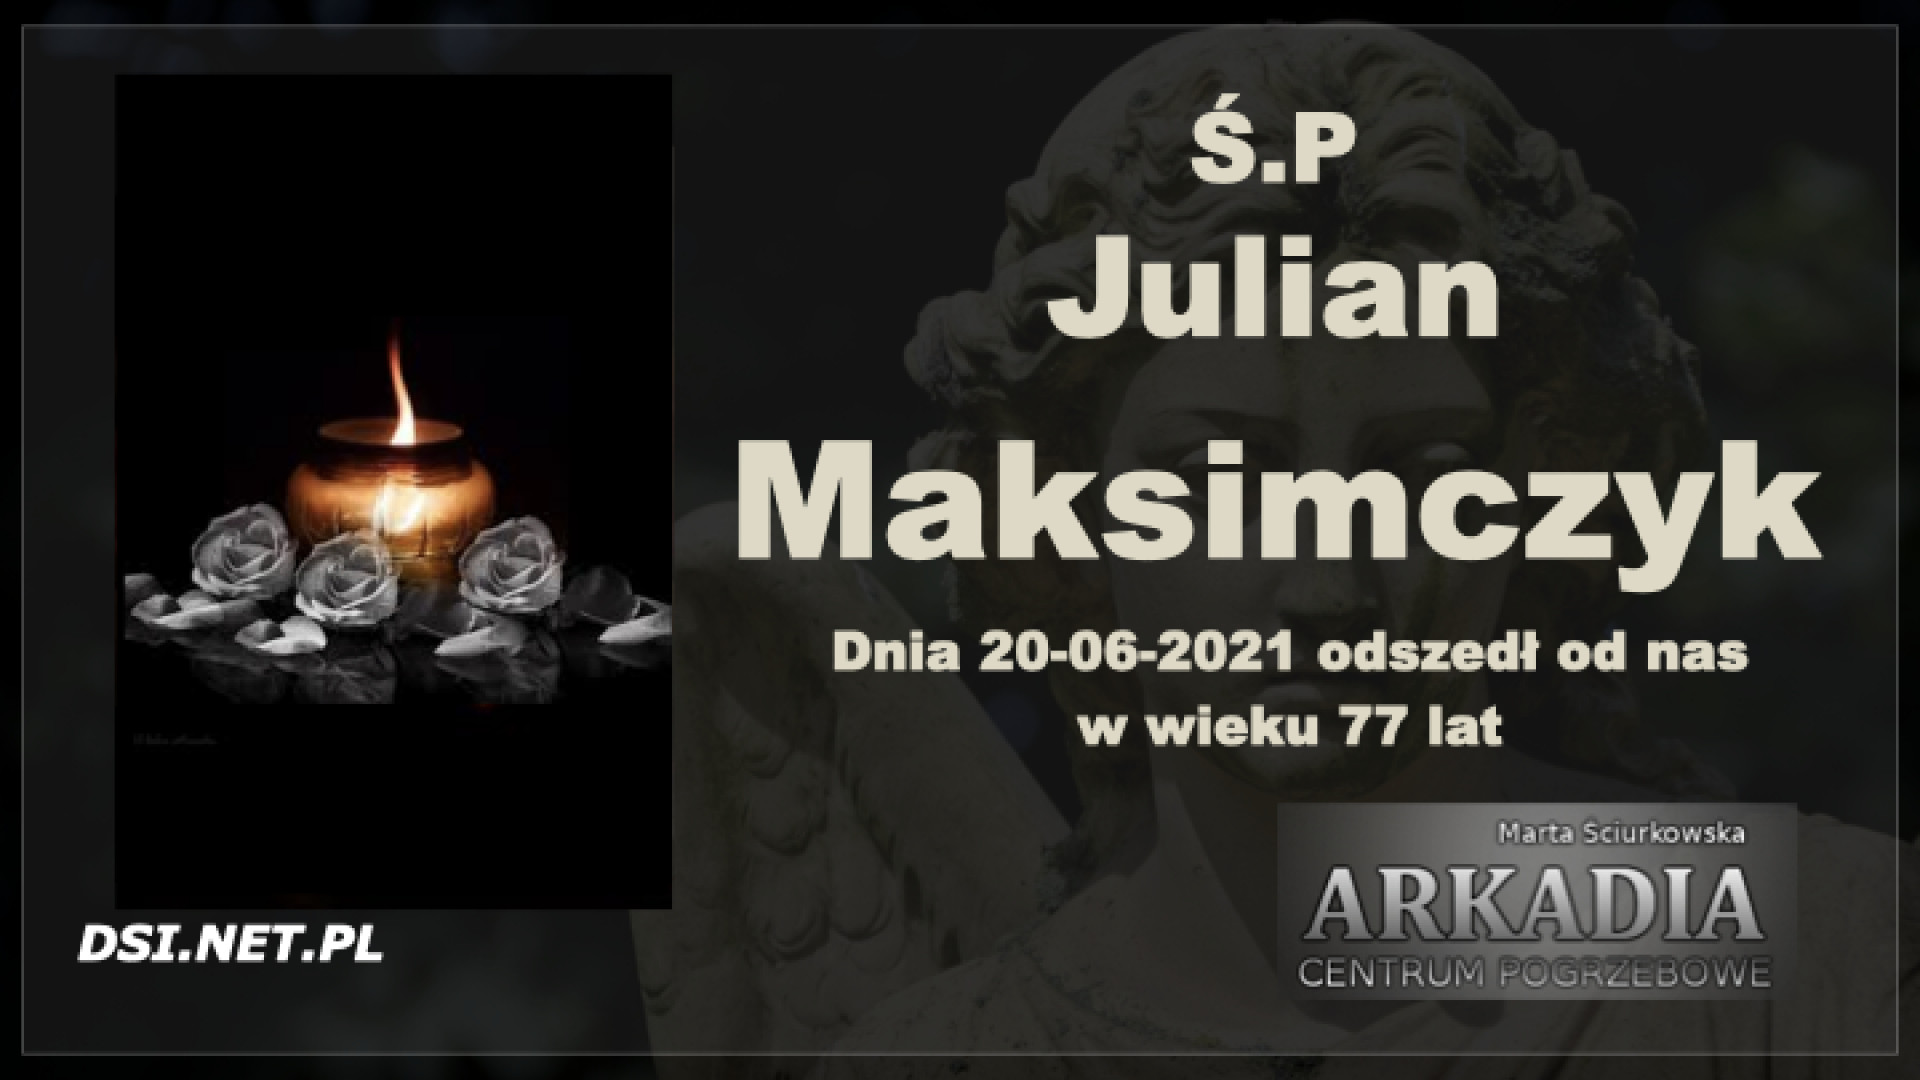 Ś.P. Julian Maksimczyk